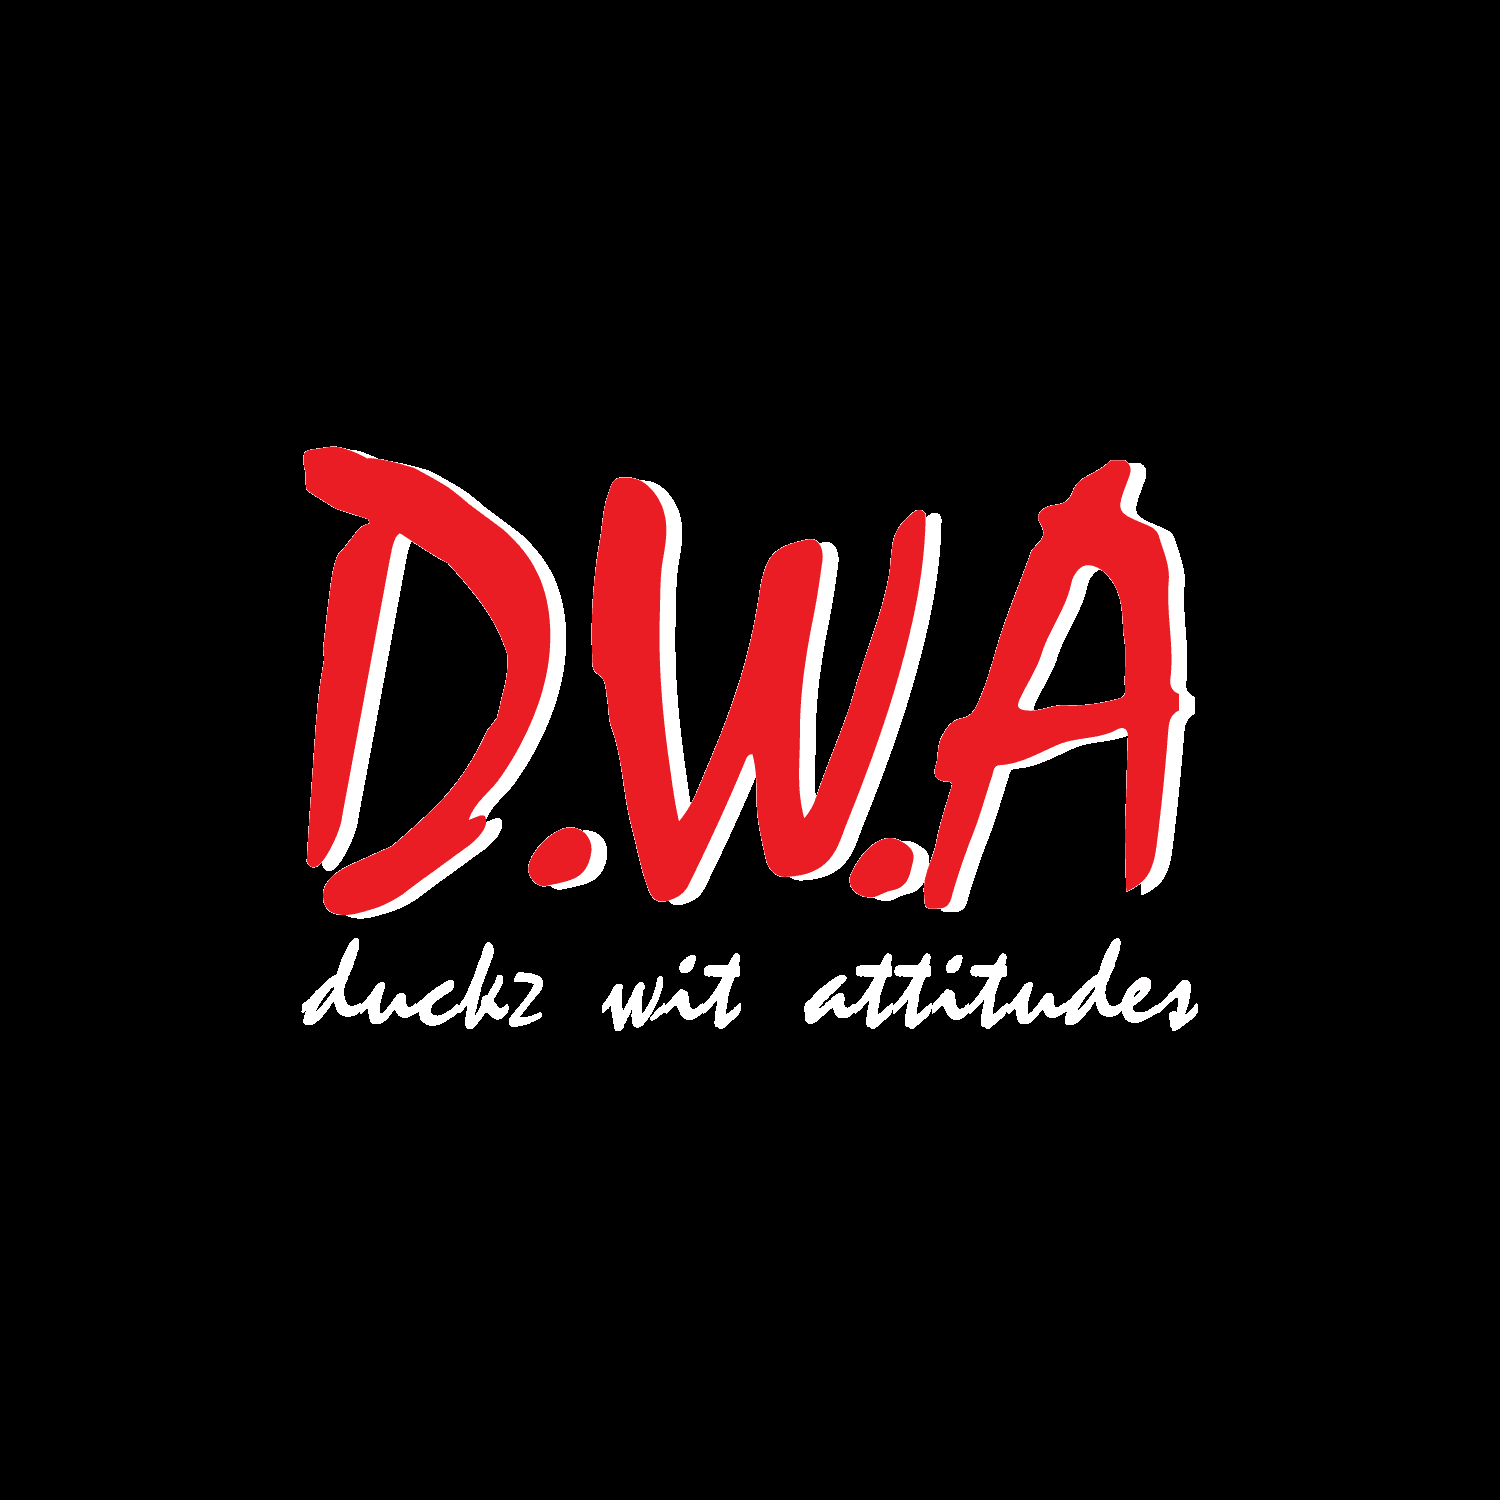 Duckz Wit Attitudes